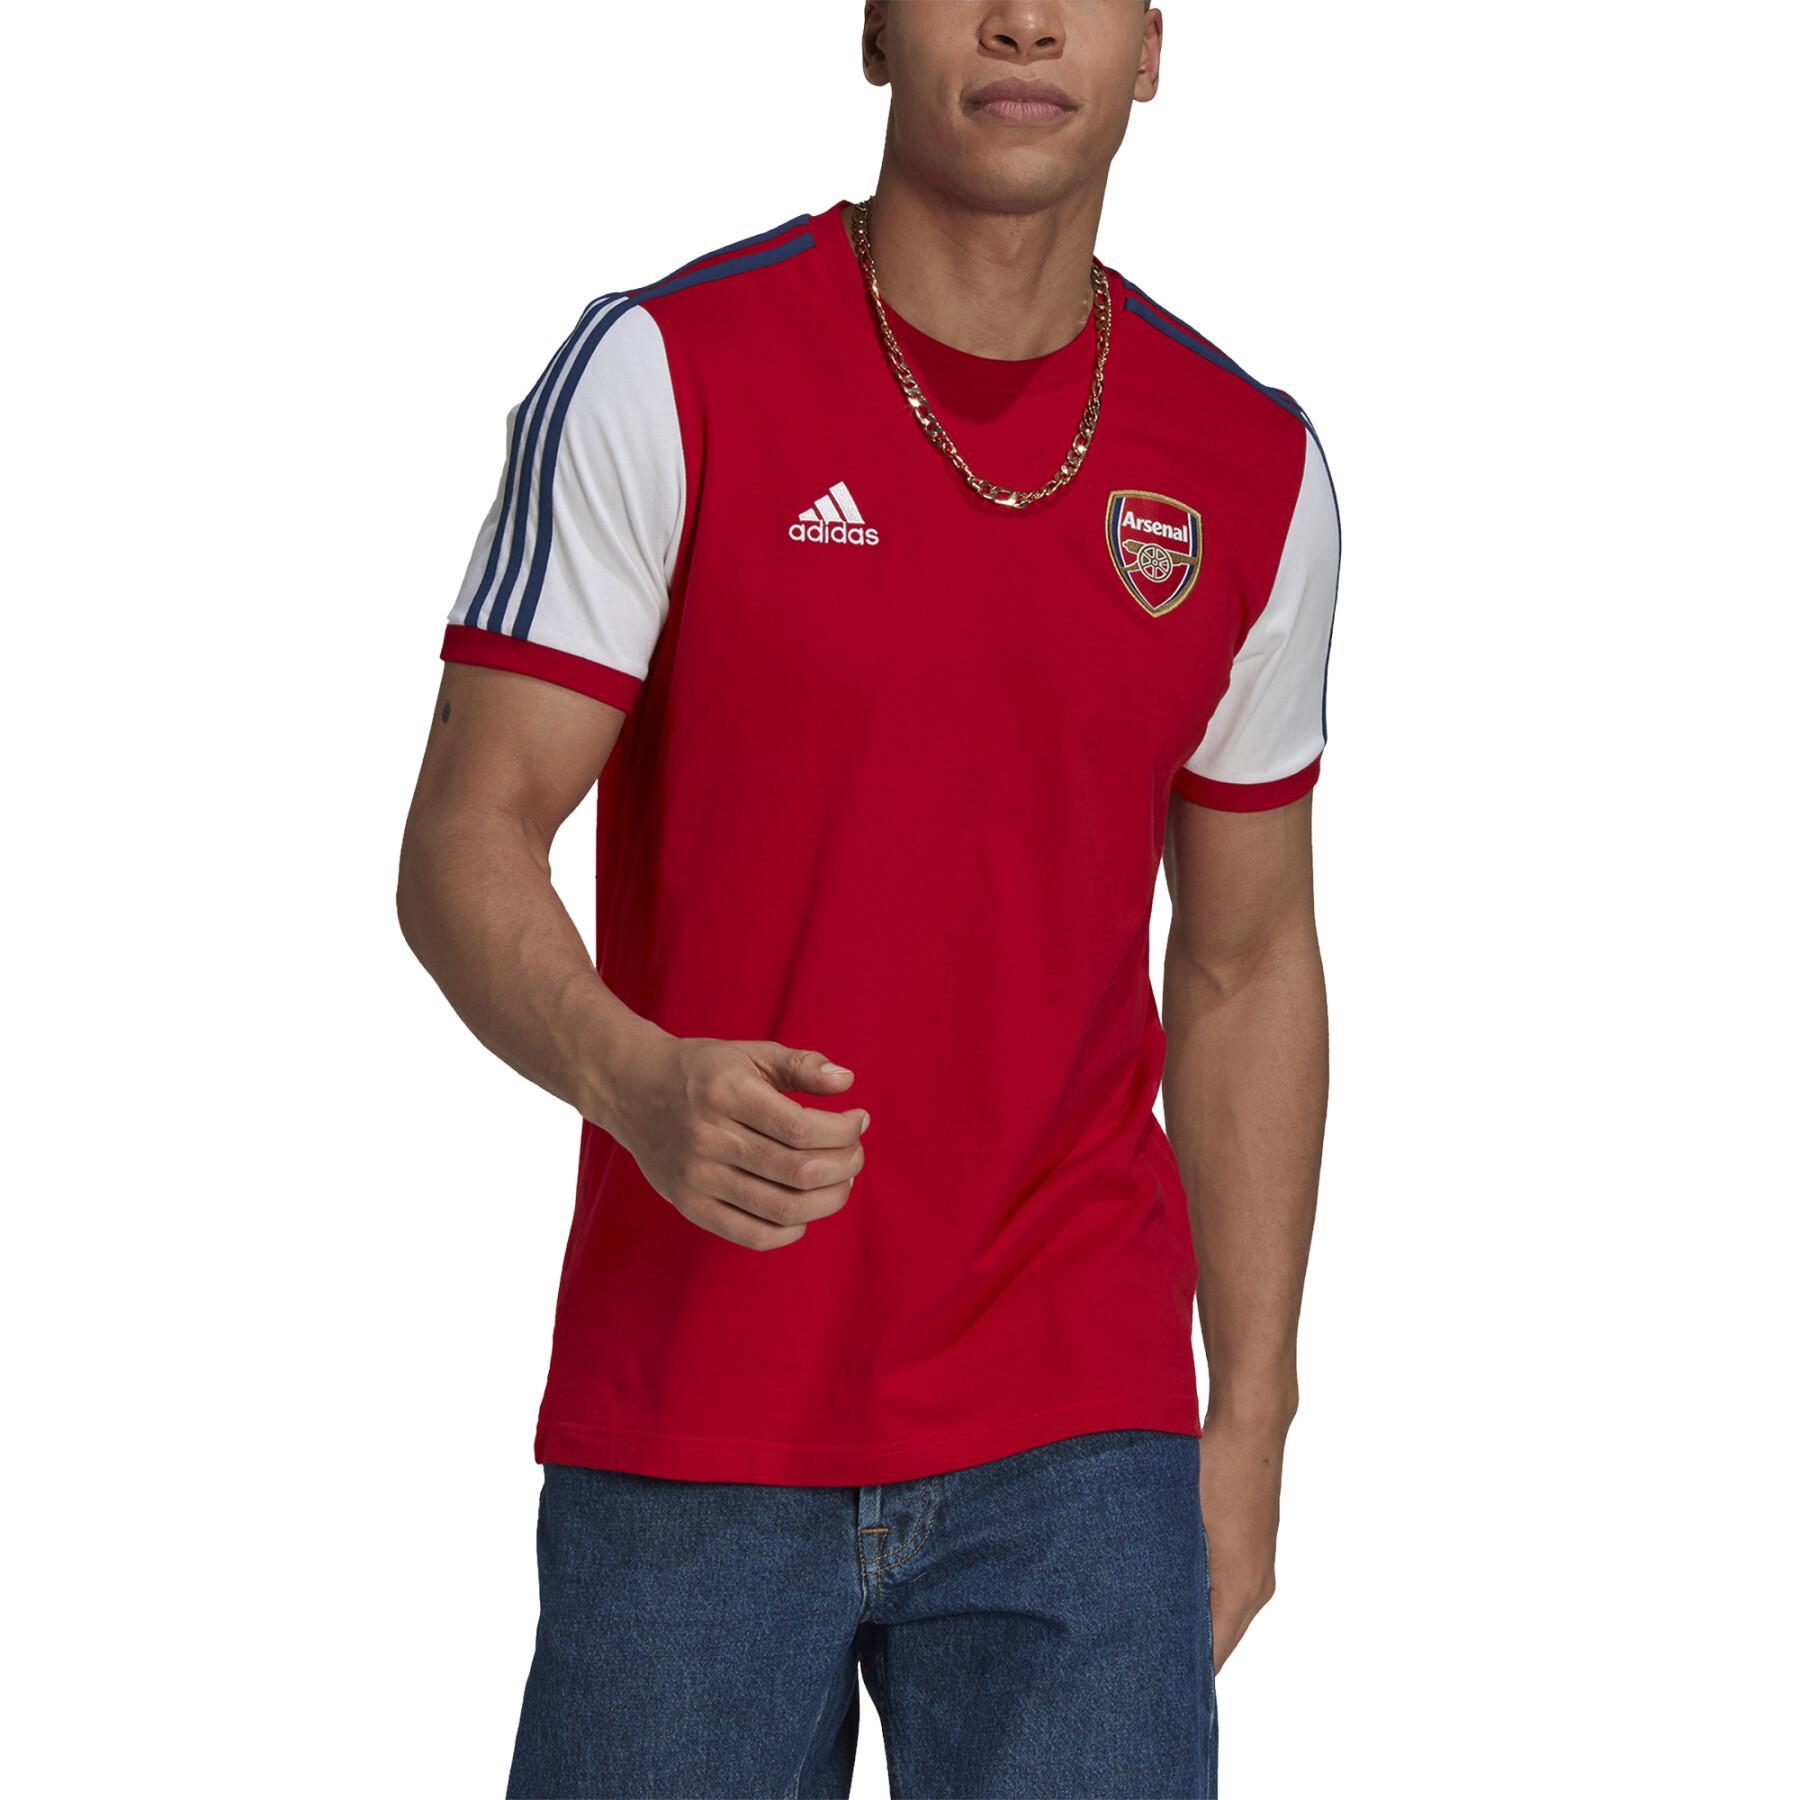 T-shirt Arsenal 3-Stripes